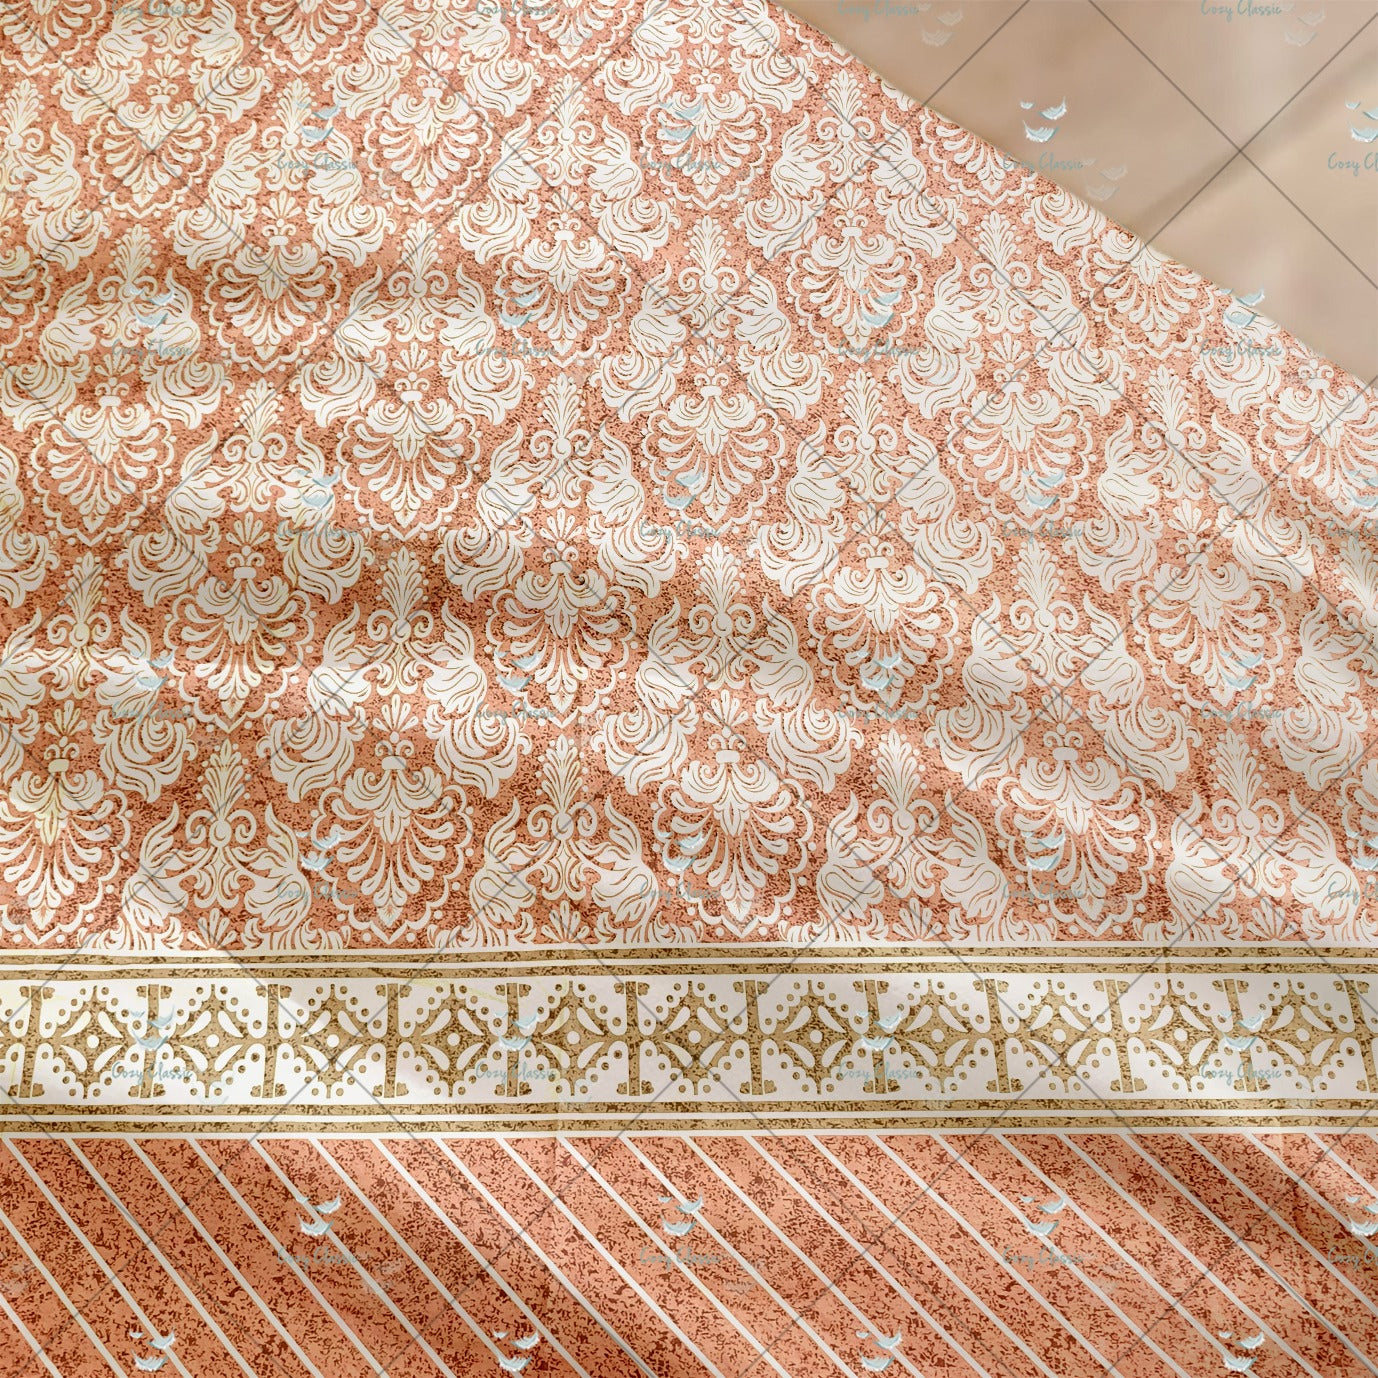 Peach Printed Cotton Bedsheets, Duvet & Comforter Sets